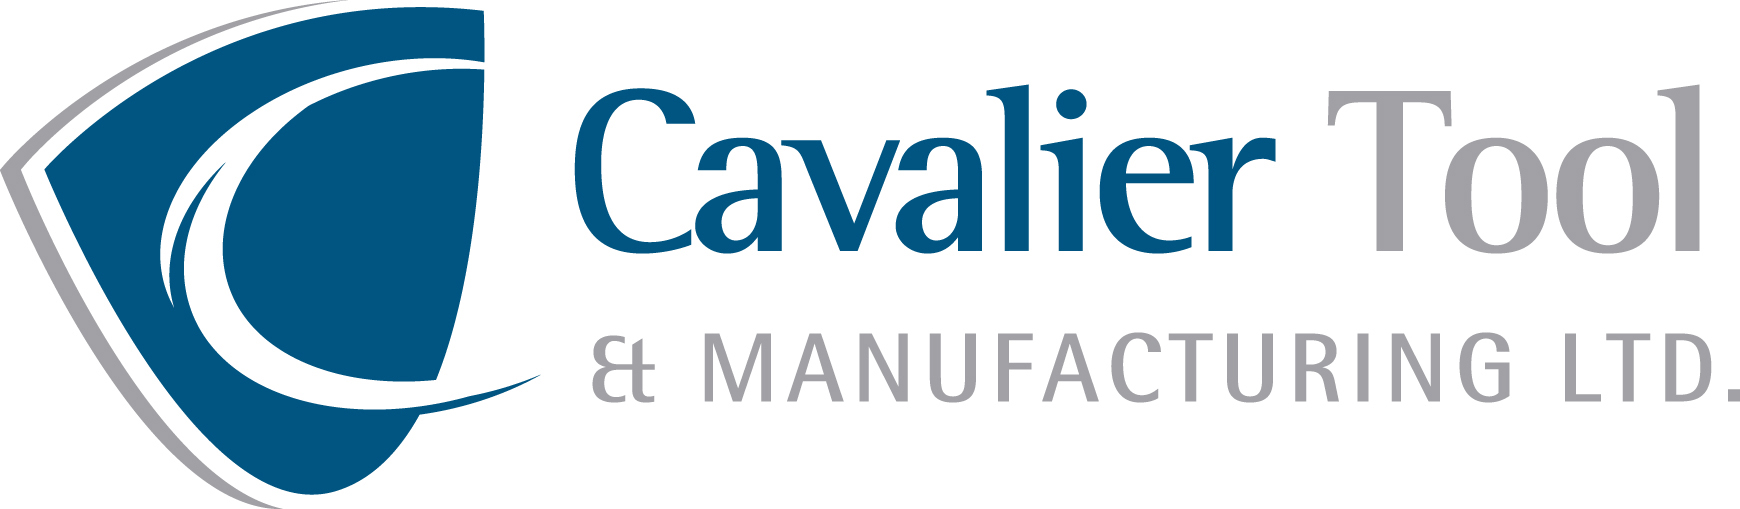 Cavalier Tool logo